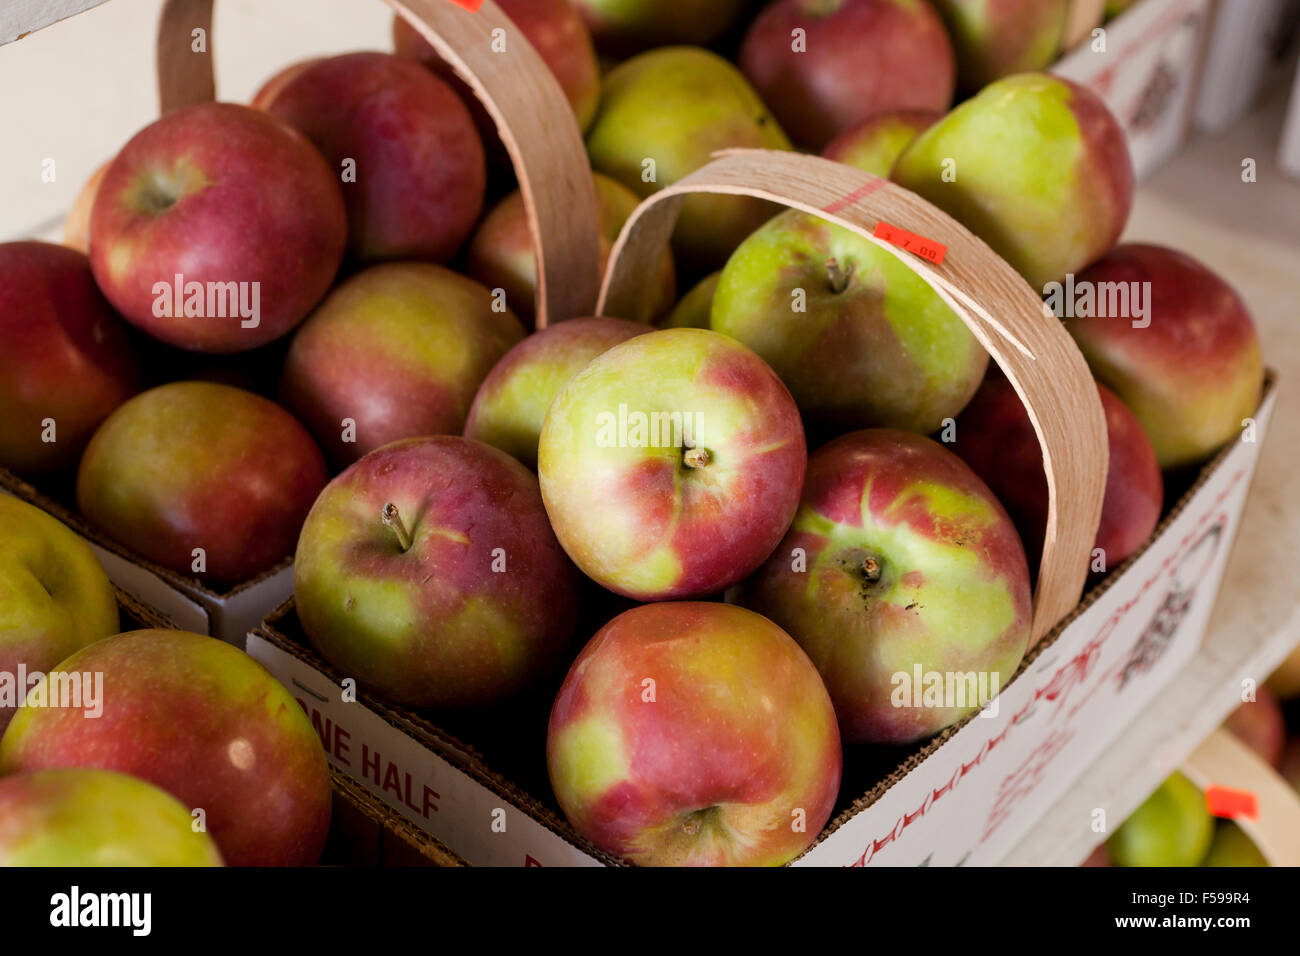 https://c8.alamy.com/comp/F599R4/mcintosh-apples-at-farmers-market-usa-F599R4.jpg